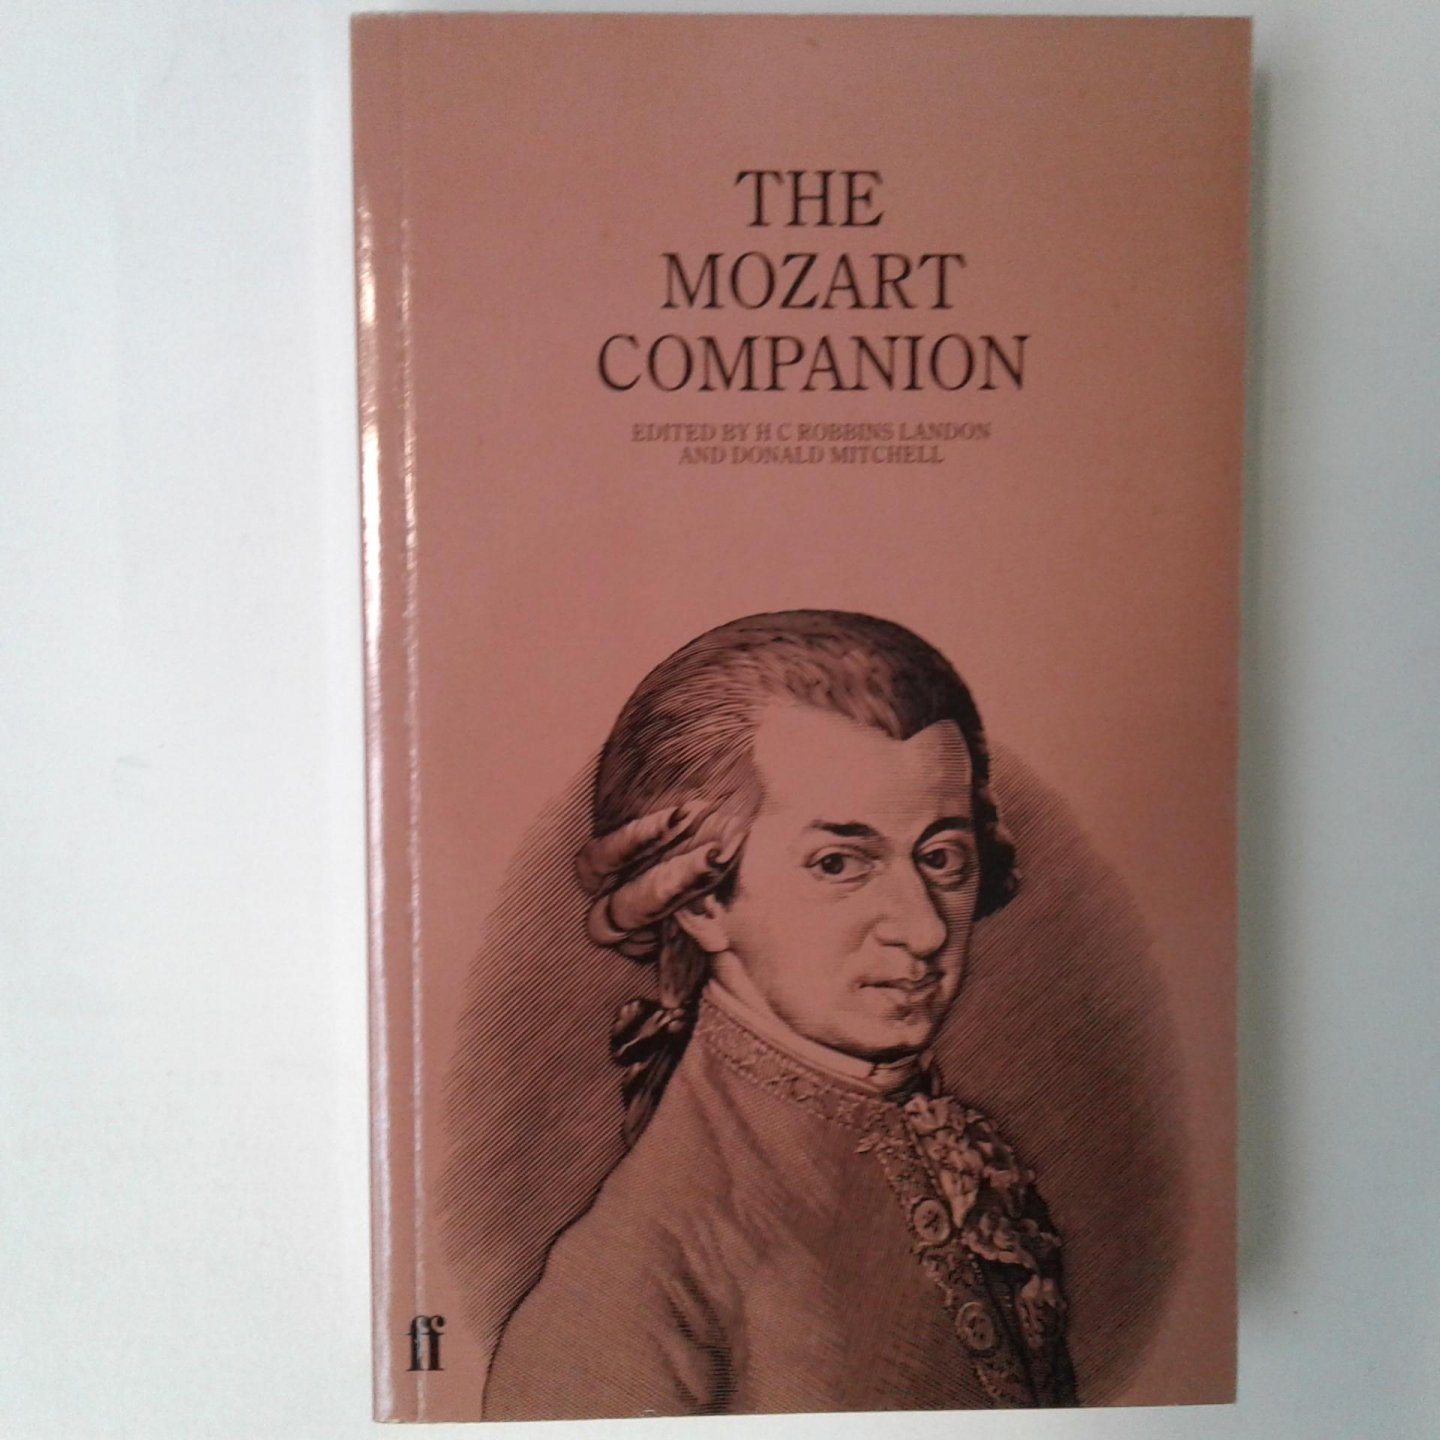 Landon, H. C. Robbins - The Mozart Companion